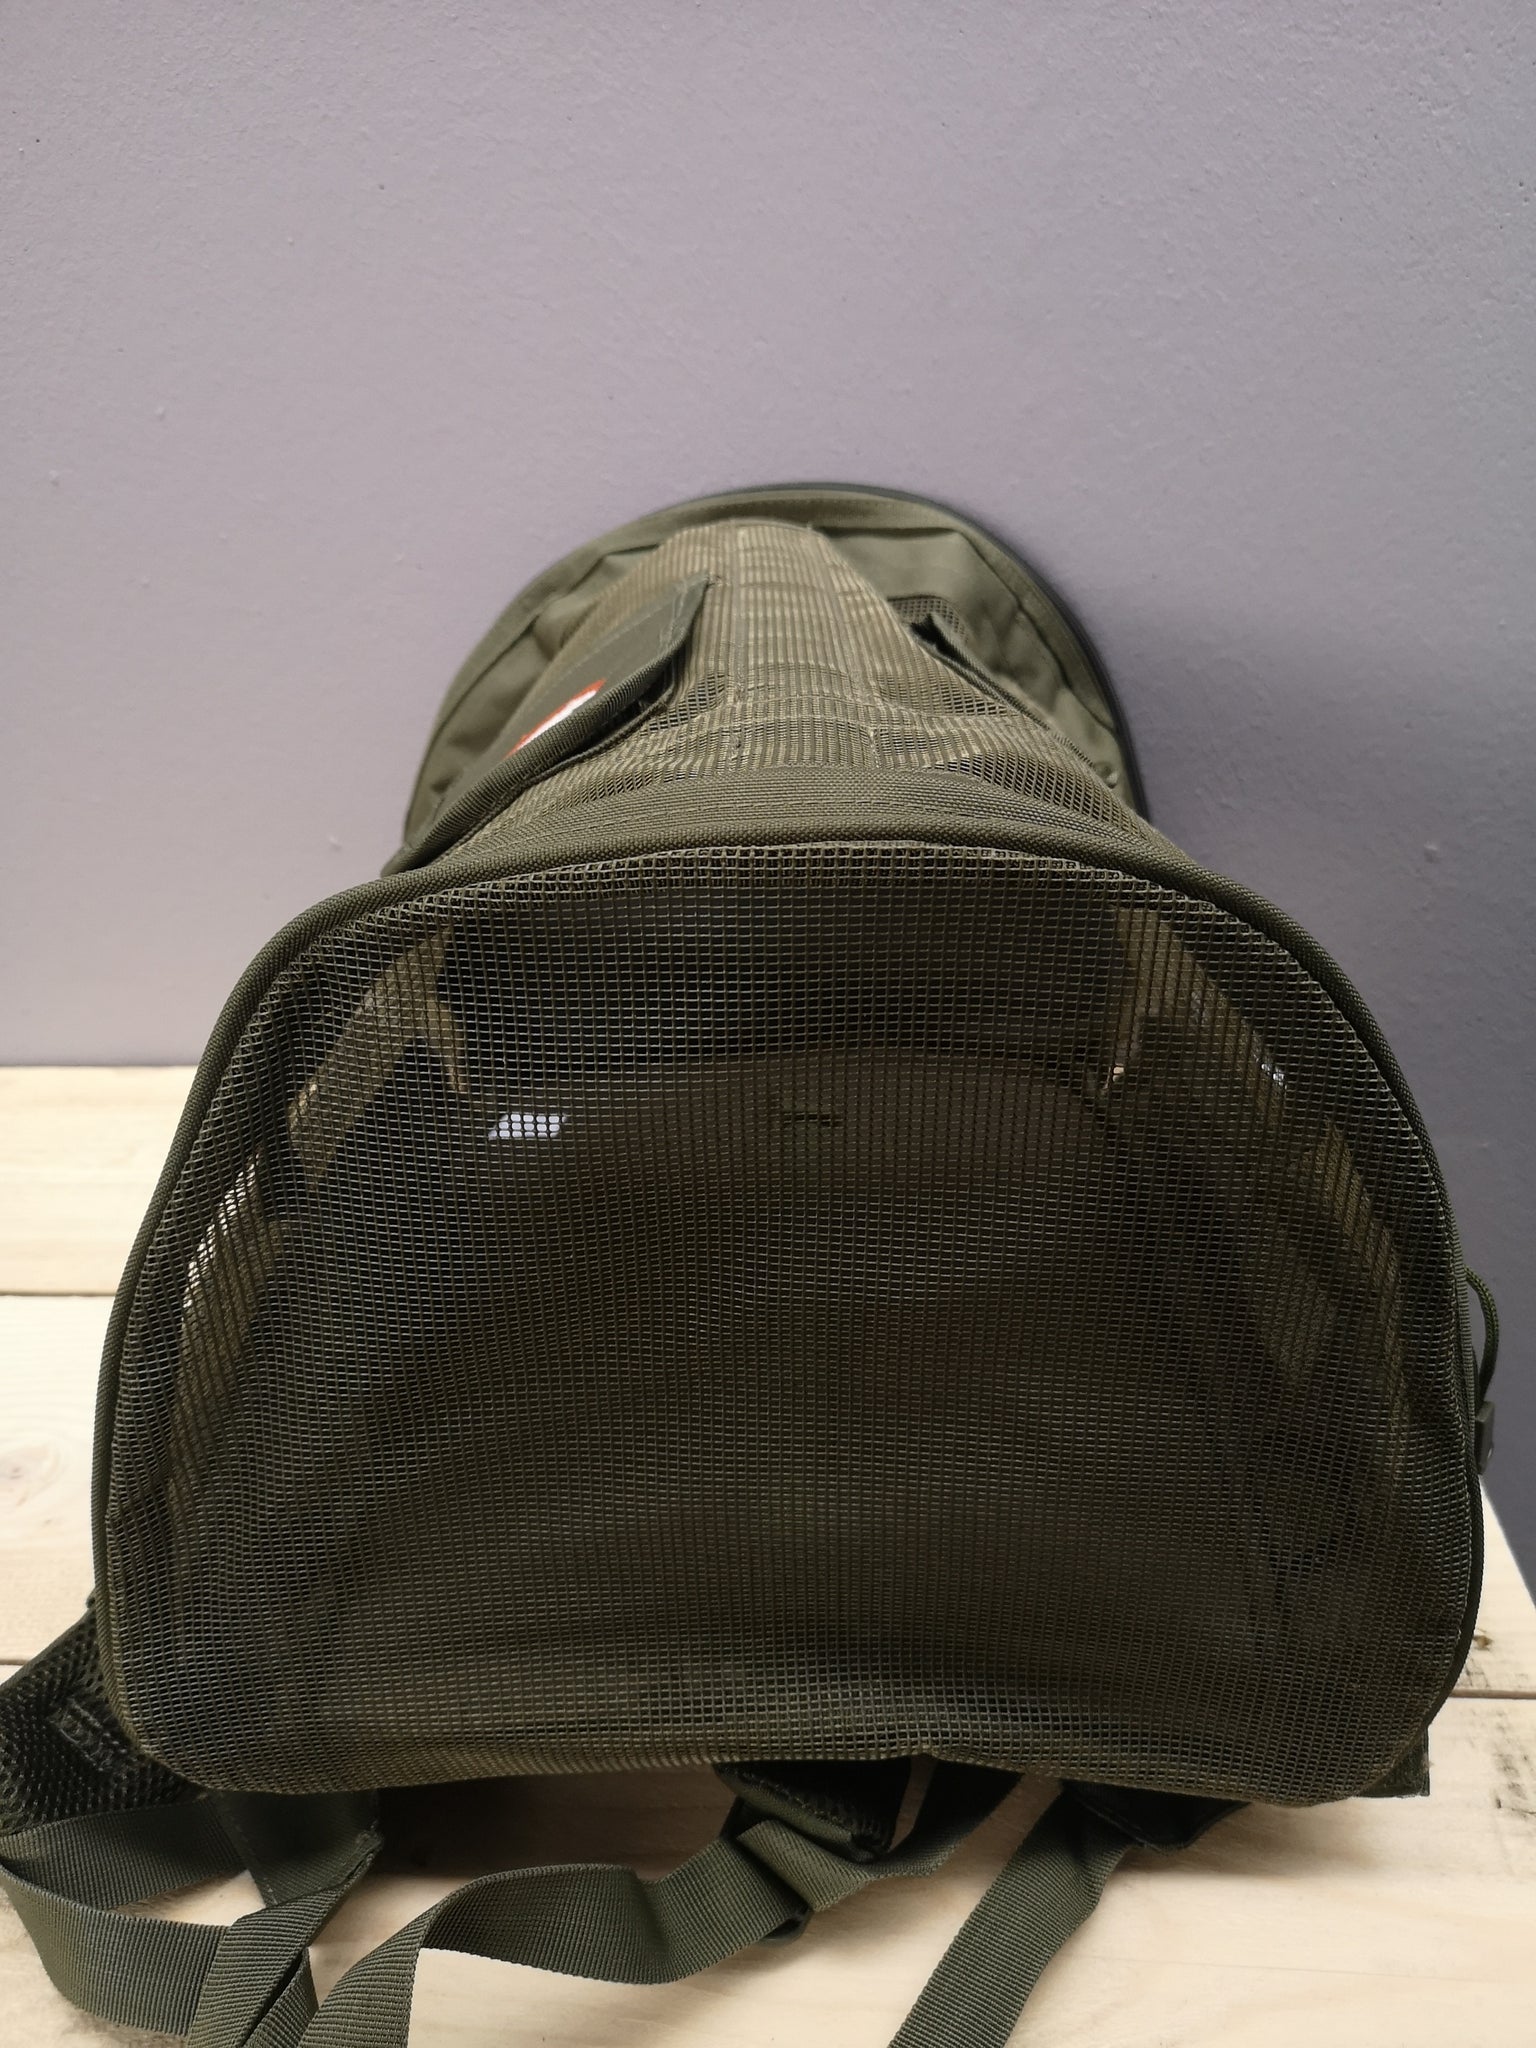  Mesh mushroom backpack